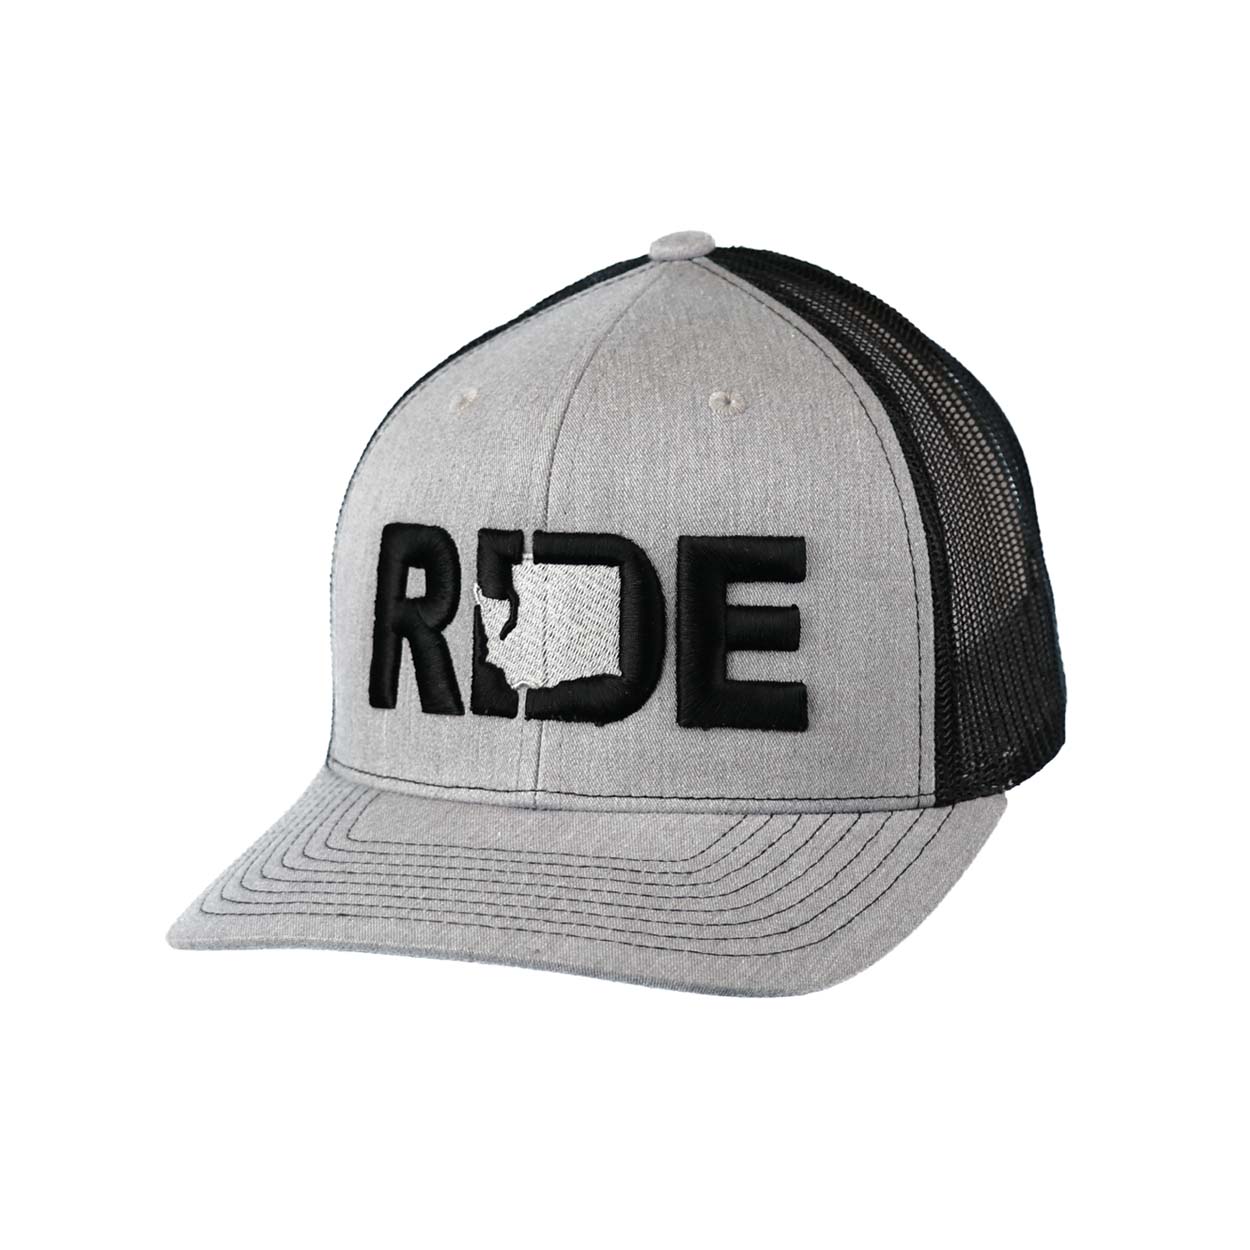 Ride Washington Classic Embroidered Snapback Trucker Hat Heather Gray/Black